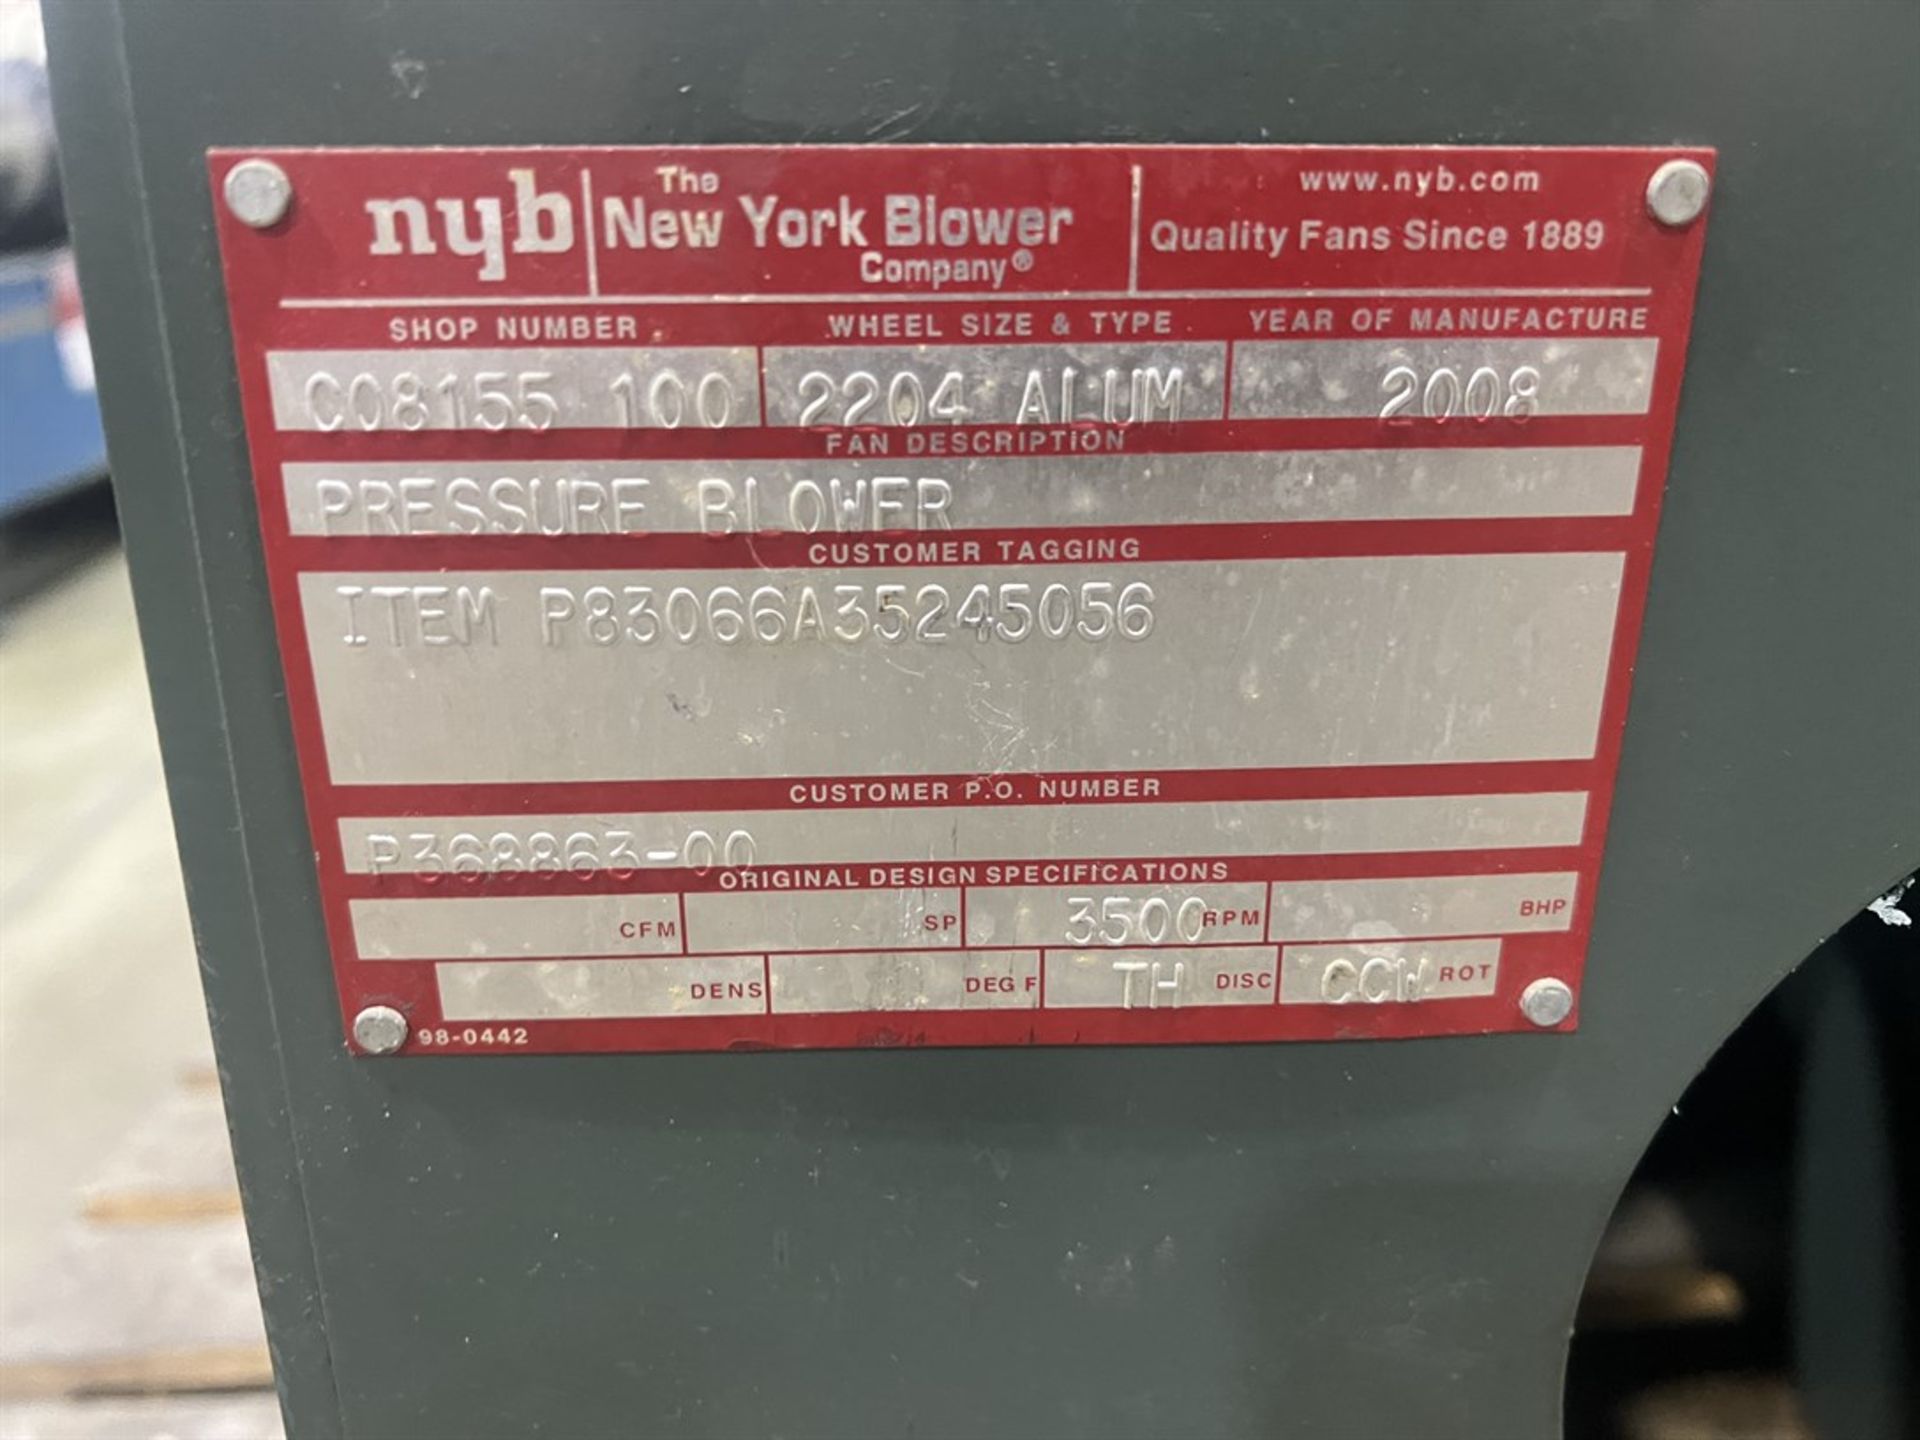 2008 NEW YORK BLOWER Pressure Blower System, 10 HP, 2204 Aluminum Wheel - Image 4 of 4